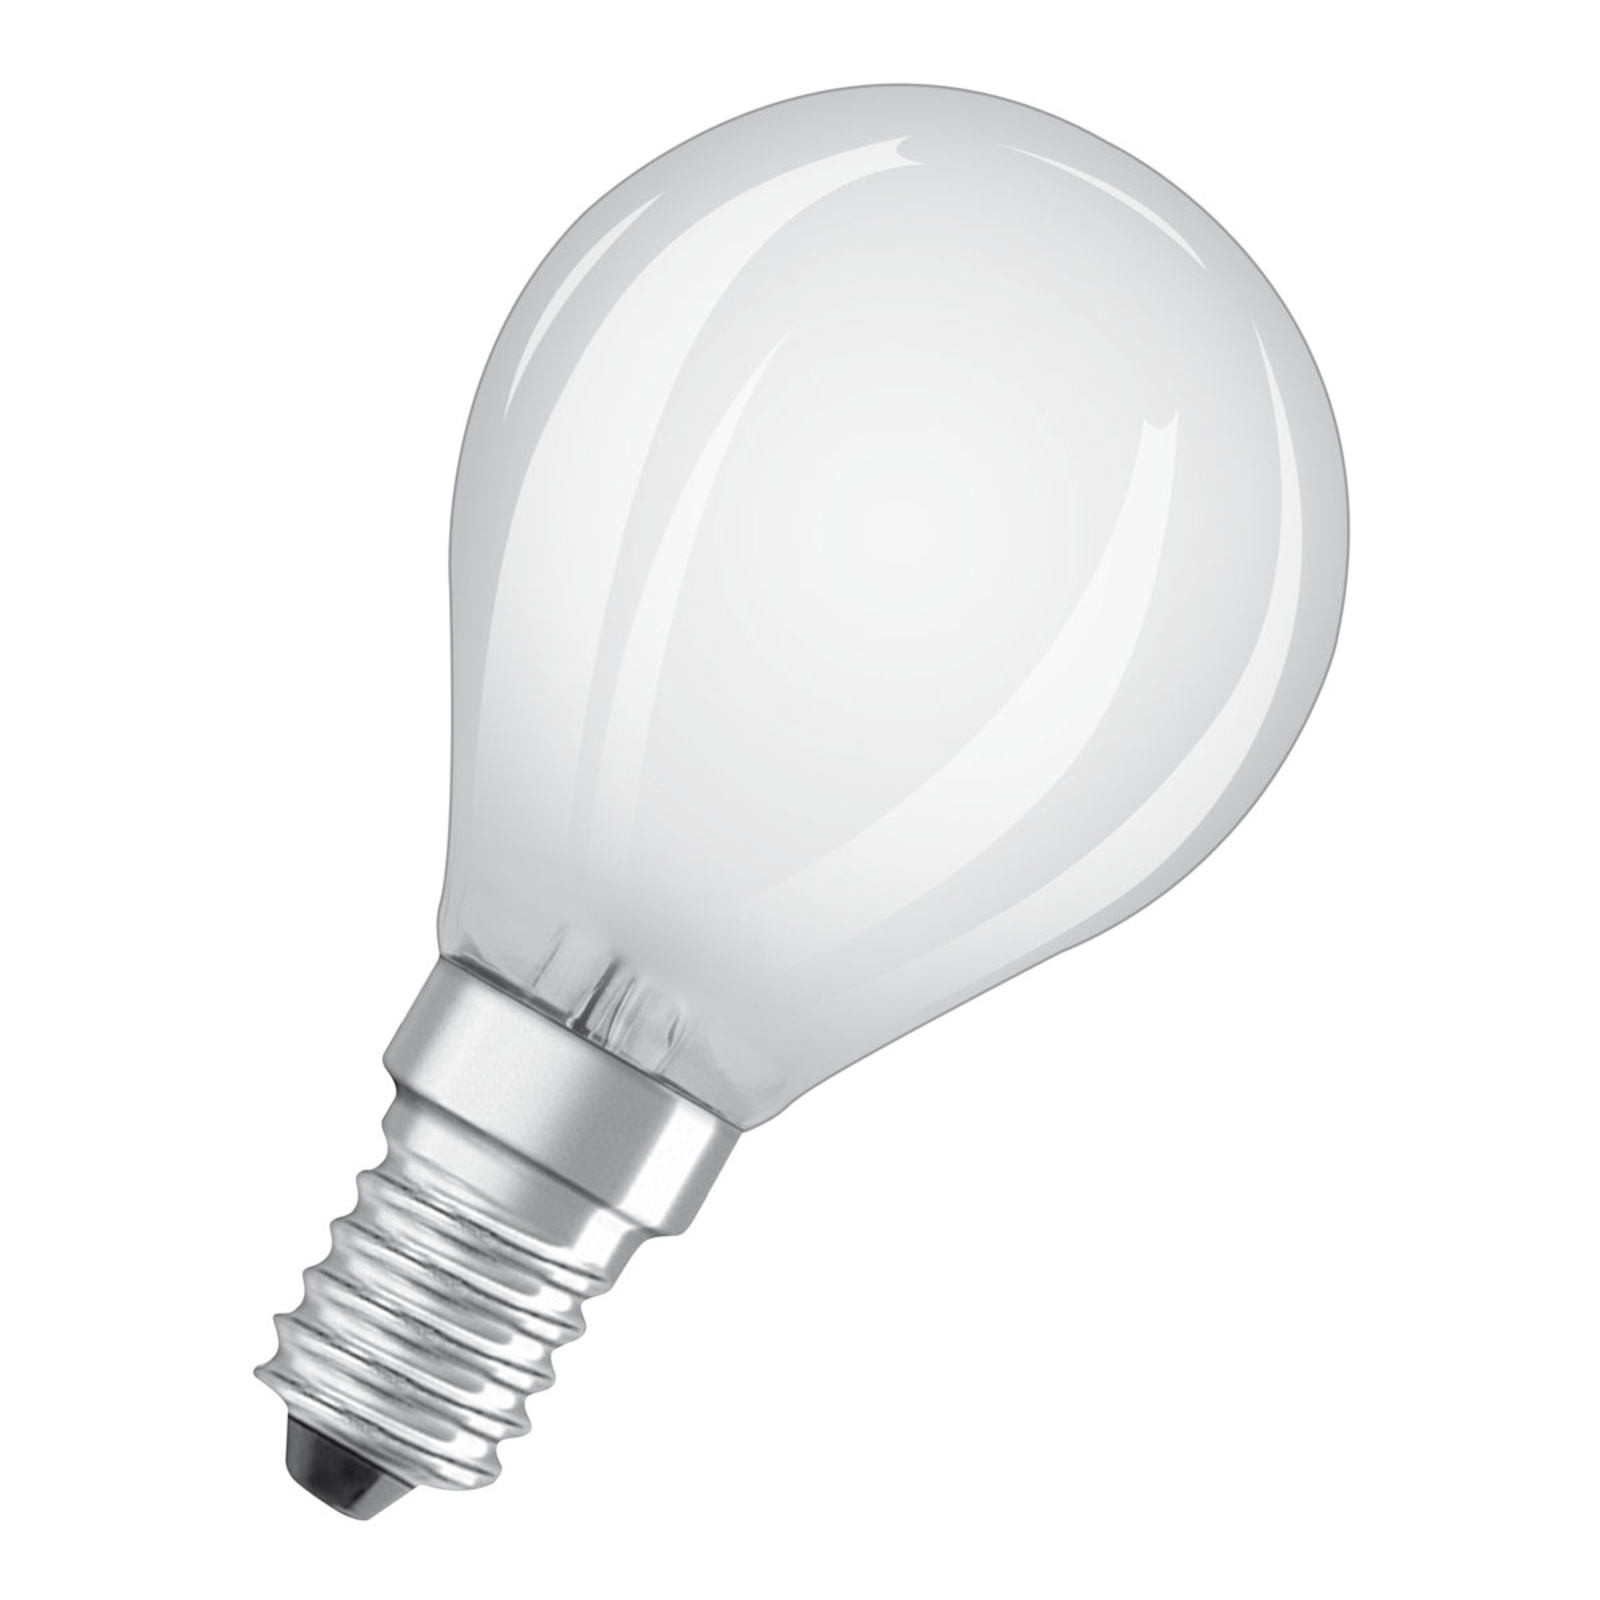 OSRAM golf ball LED bulb E14 4 W warm white 2-pack